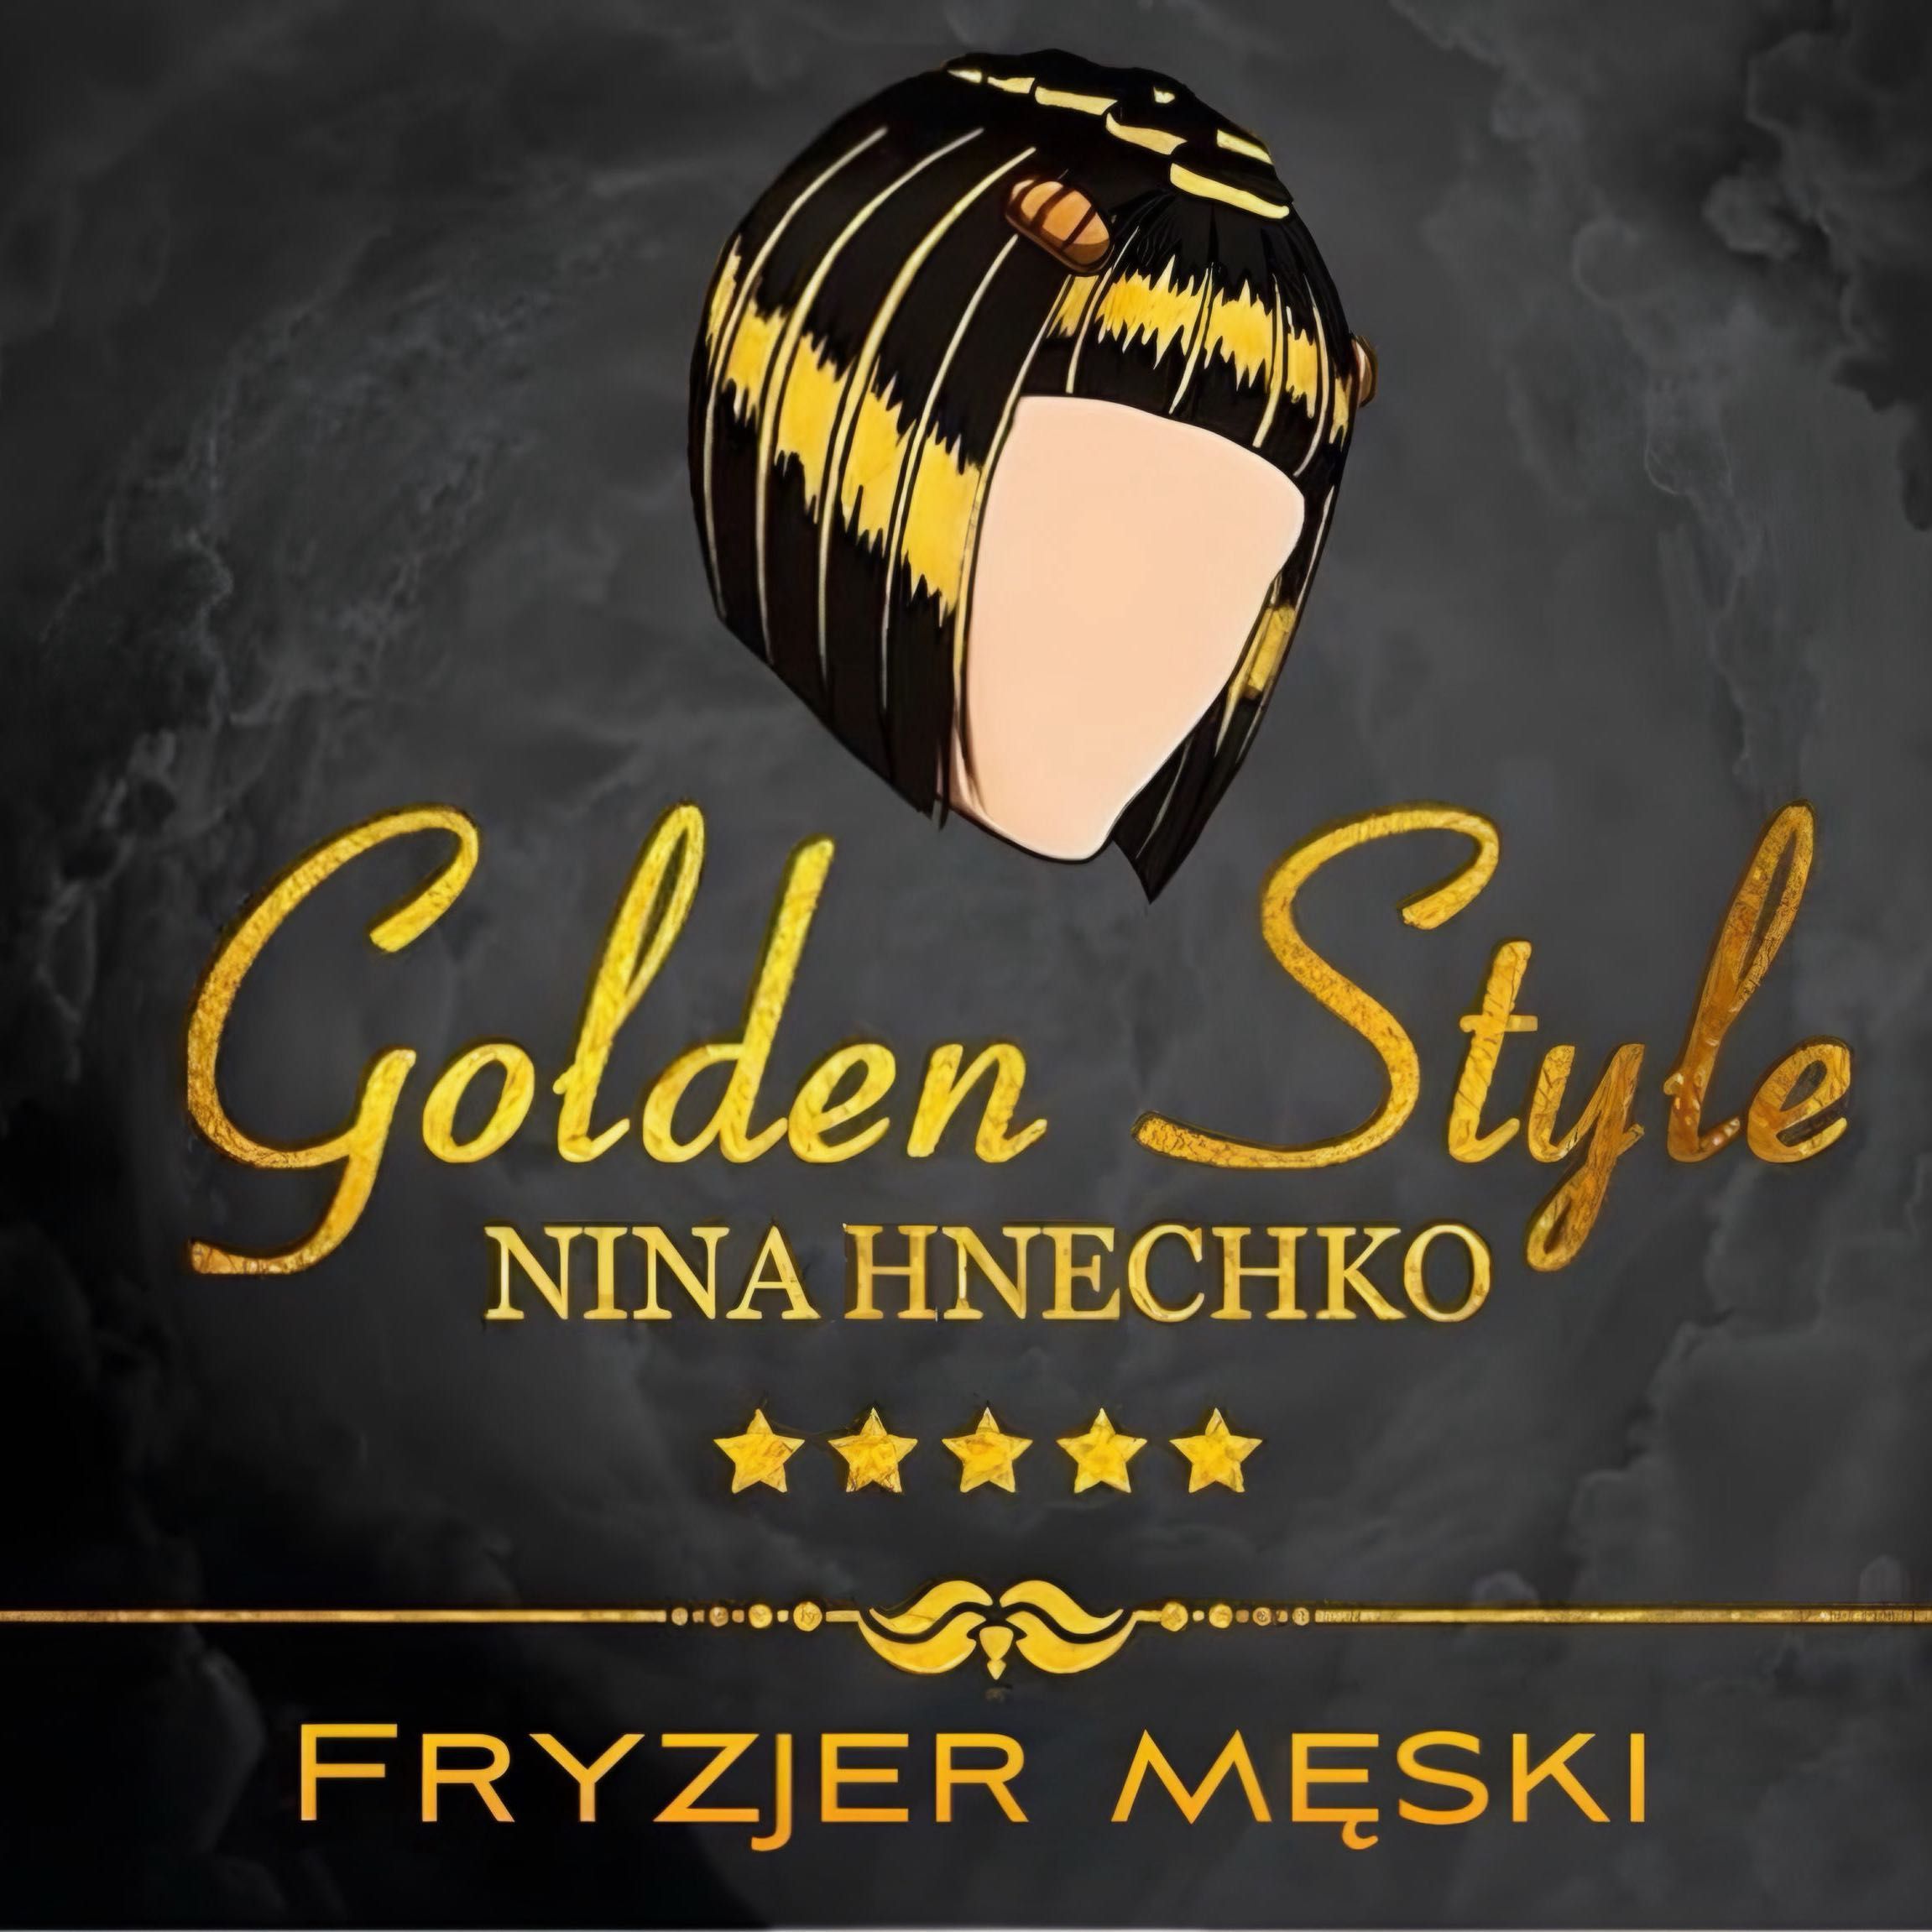 Barbershop Golden Style, Rdestowa 4u, 1, 81-577, Gdynia